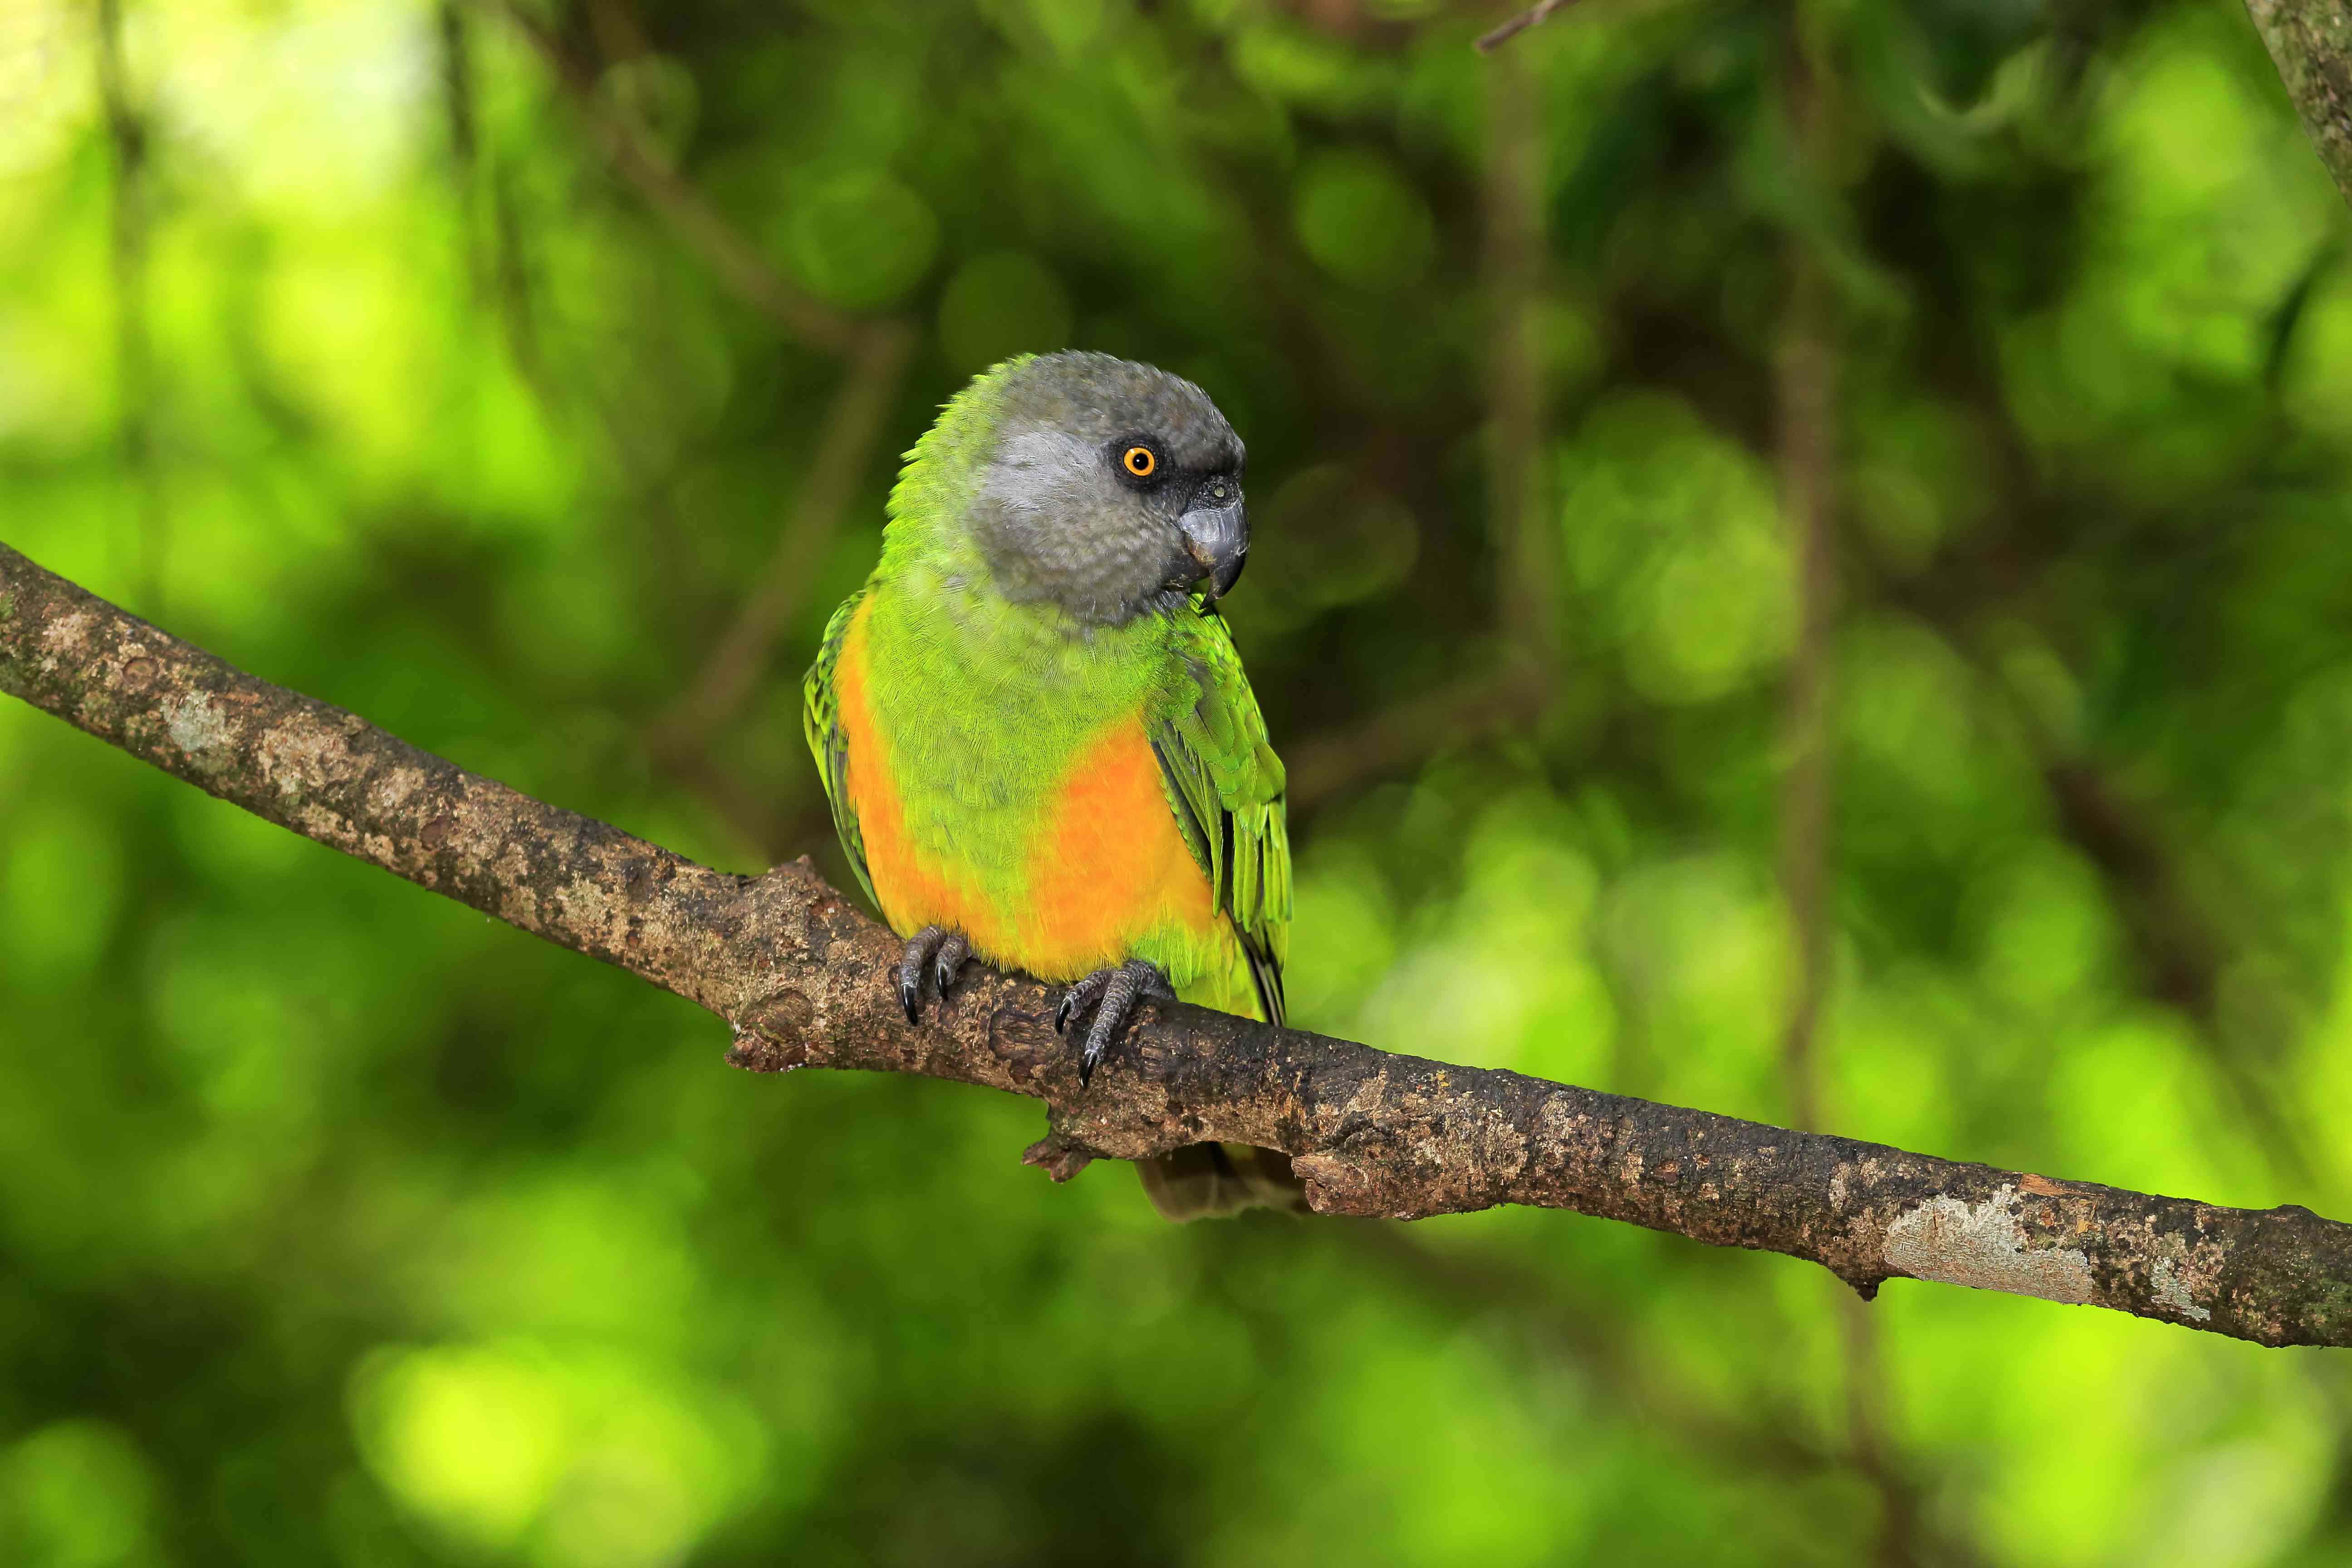 Senegal parrot on a branch